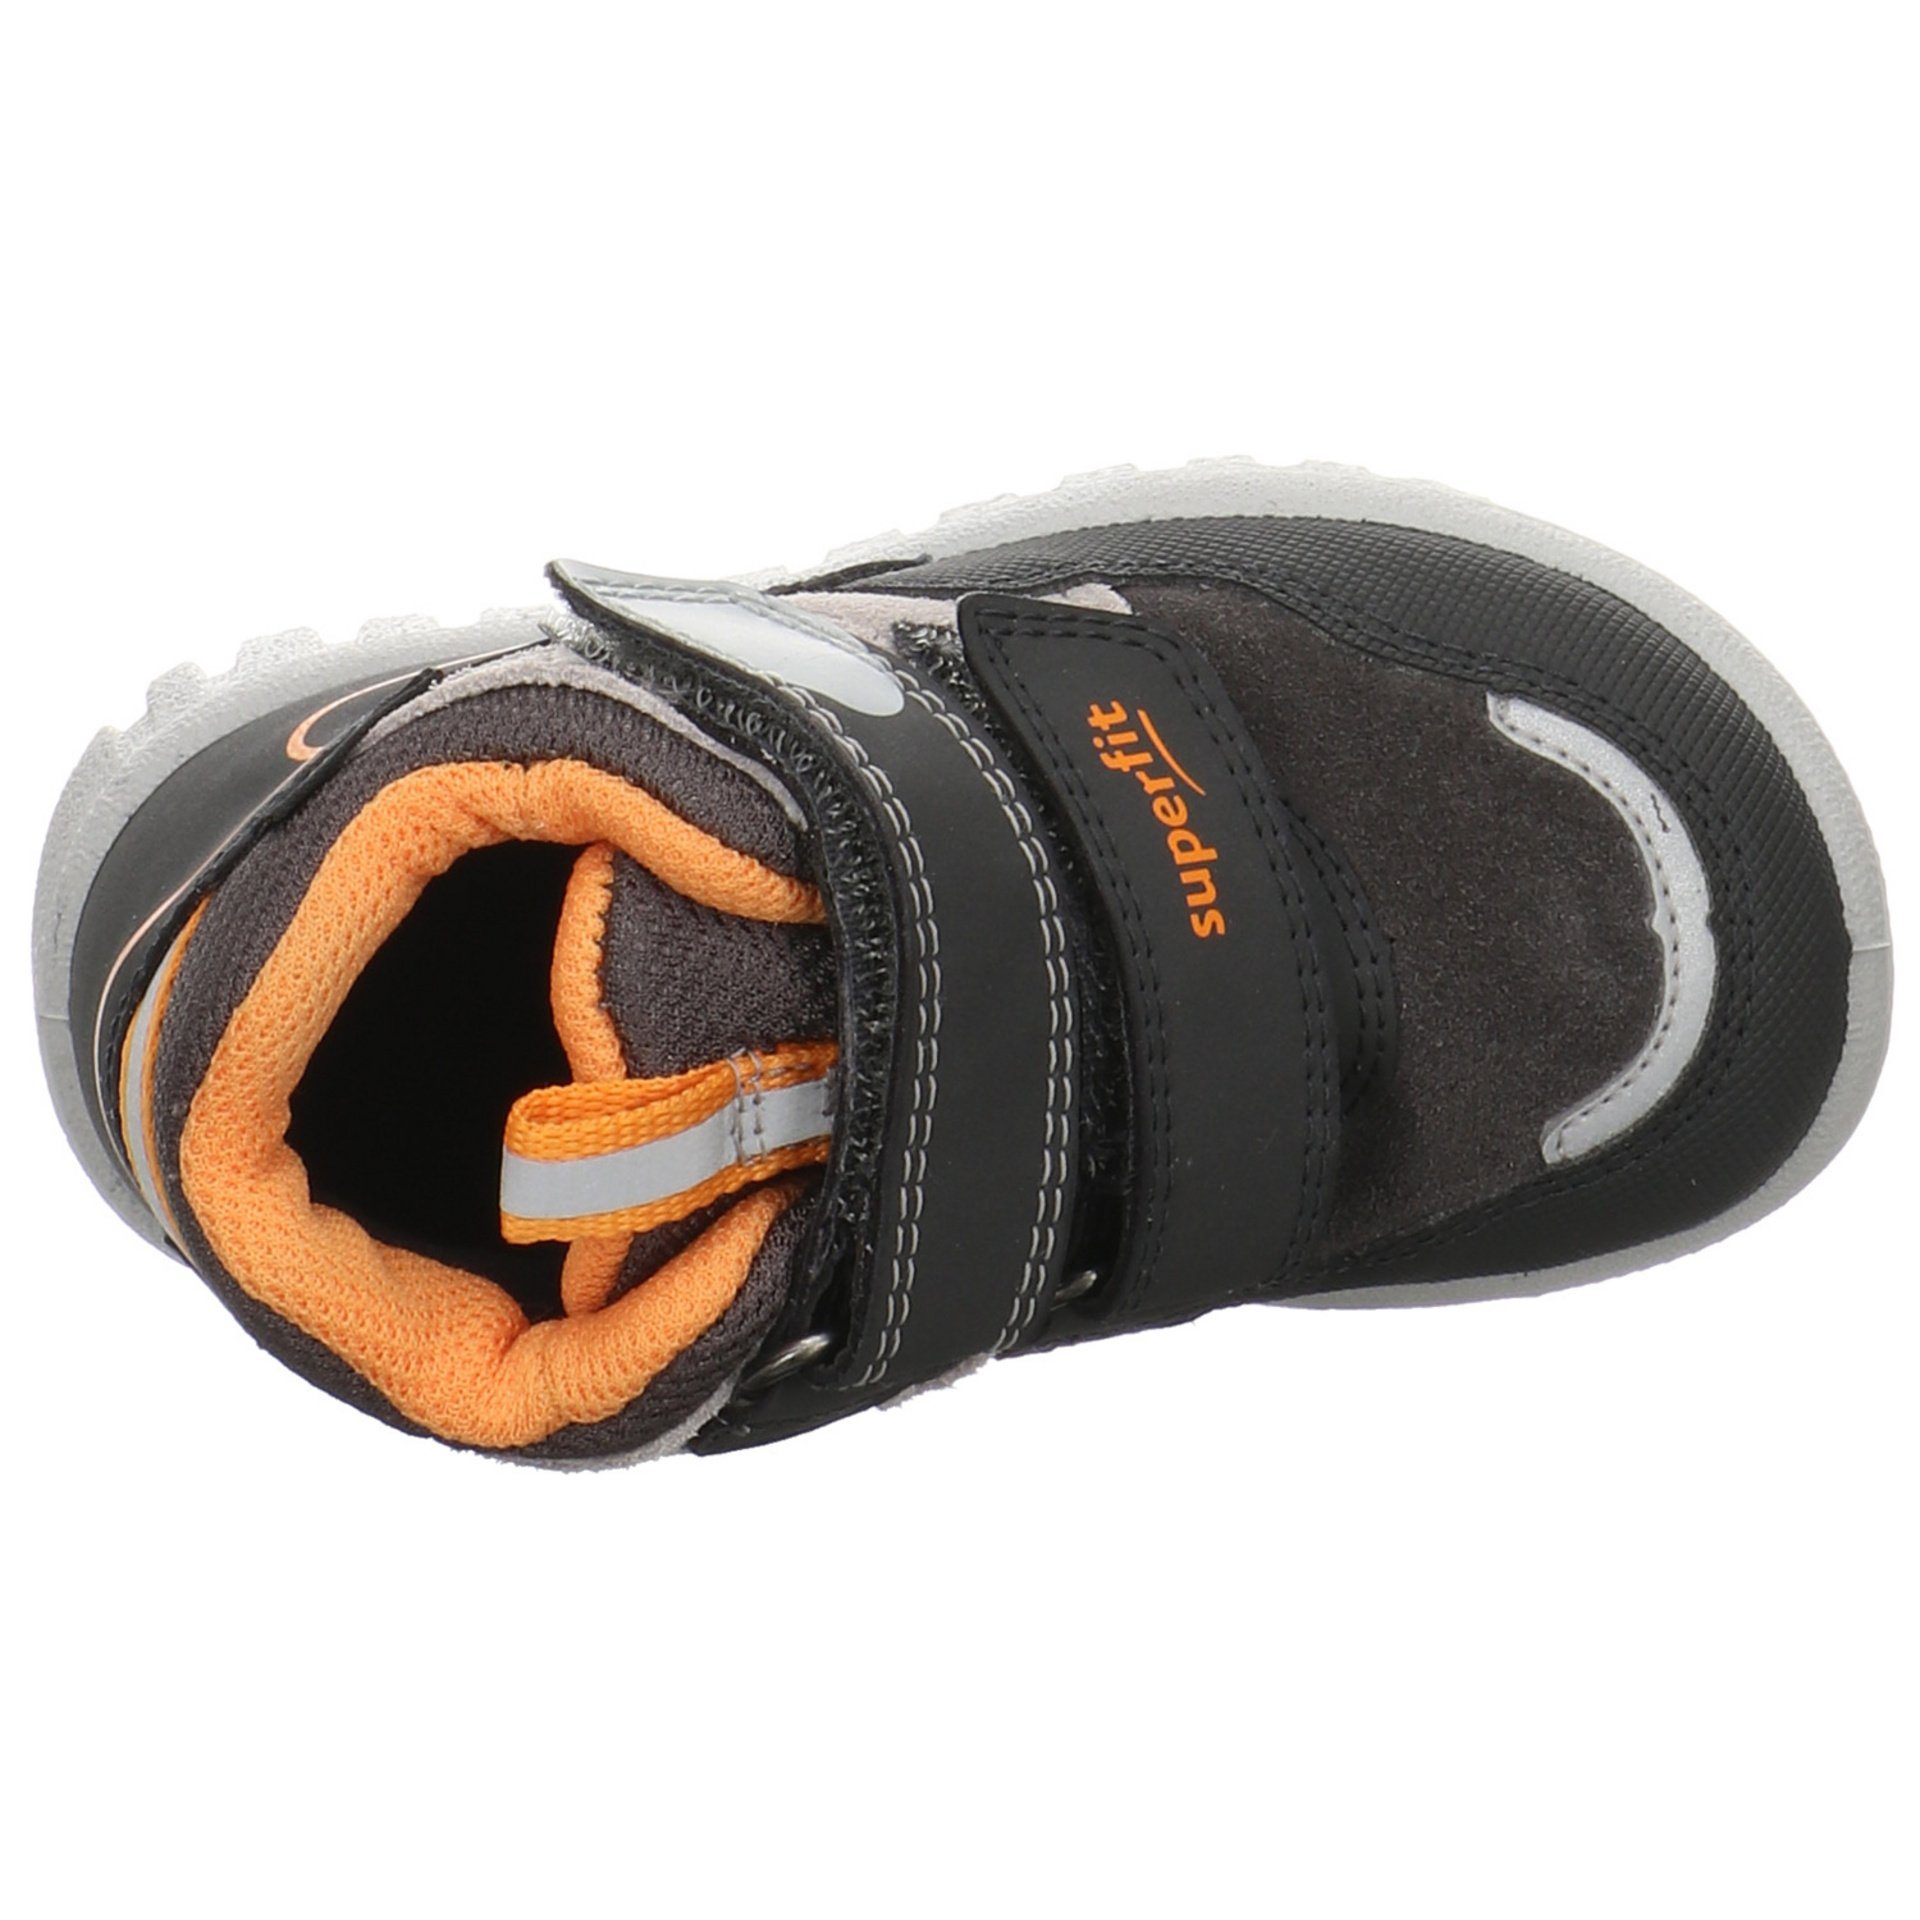 Klettschuh Mini Superfit Leder-/Textilkombination Leder-/Textilkombination 7 Sport orange grau Klettschuh